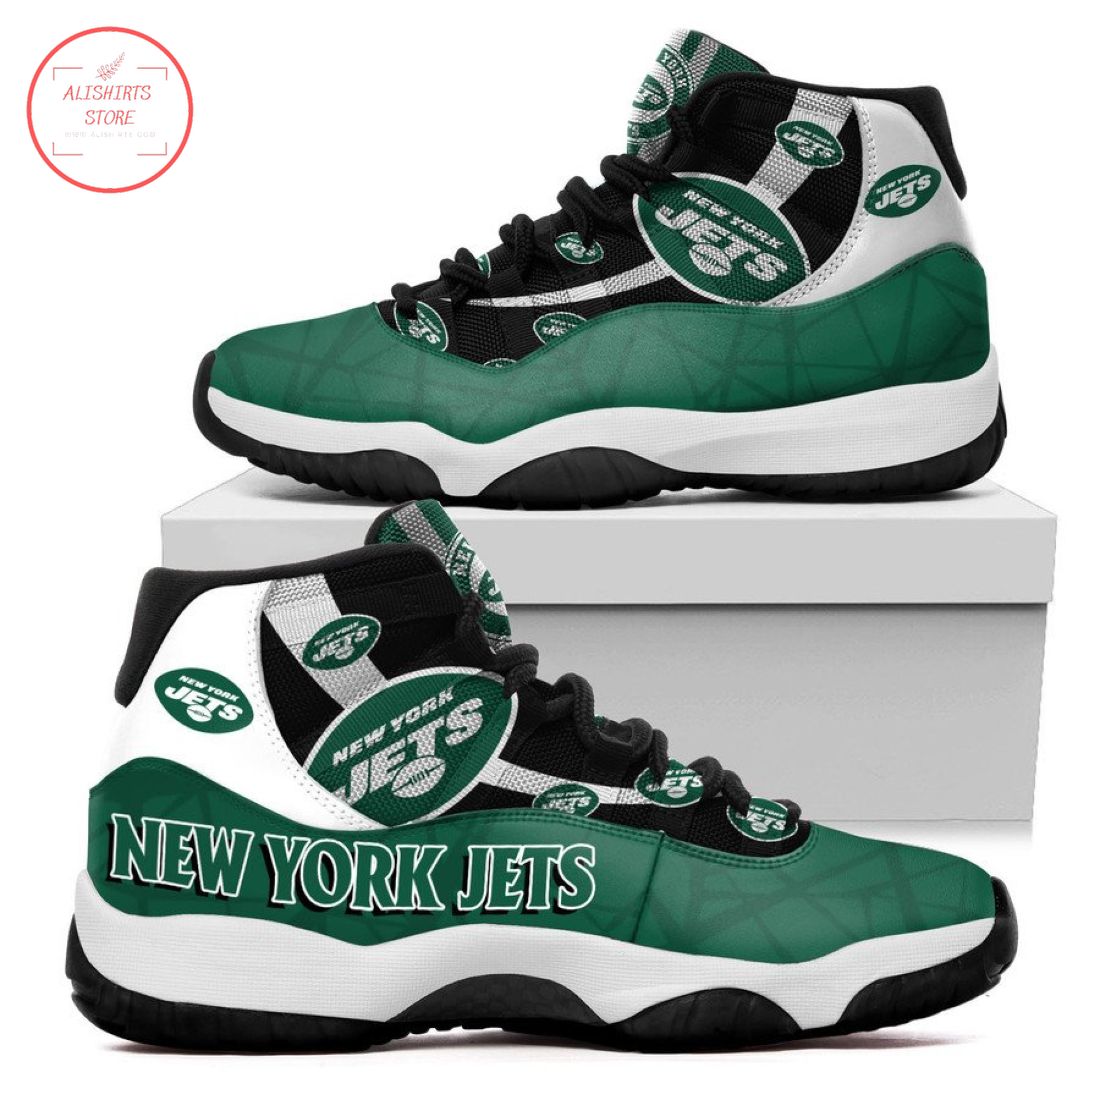 New York Jets NFL New Air Jordan 11 Sneakers Shoes